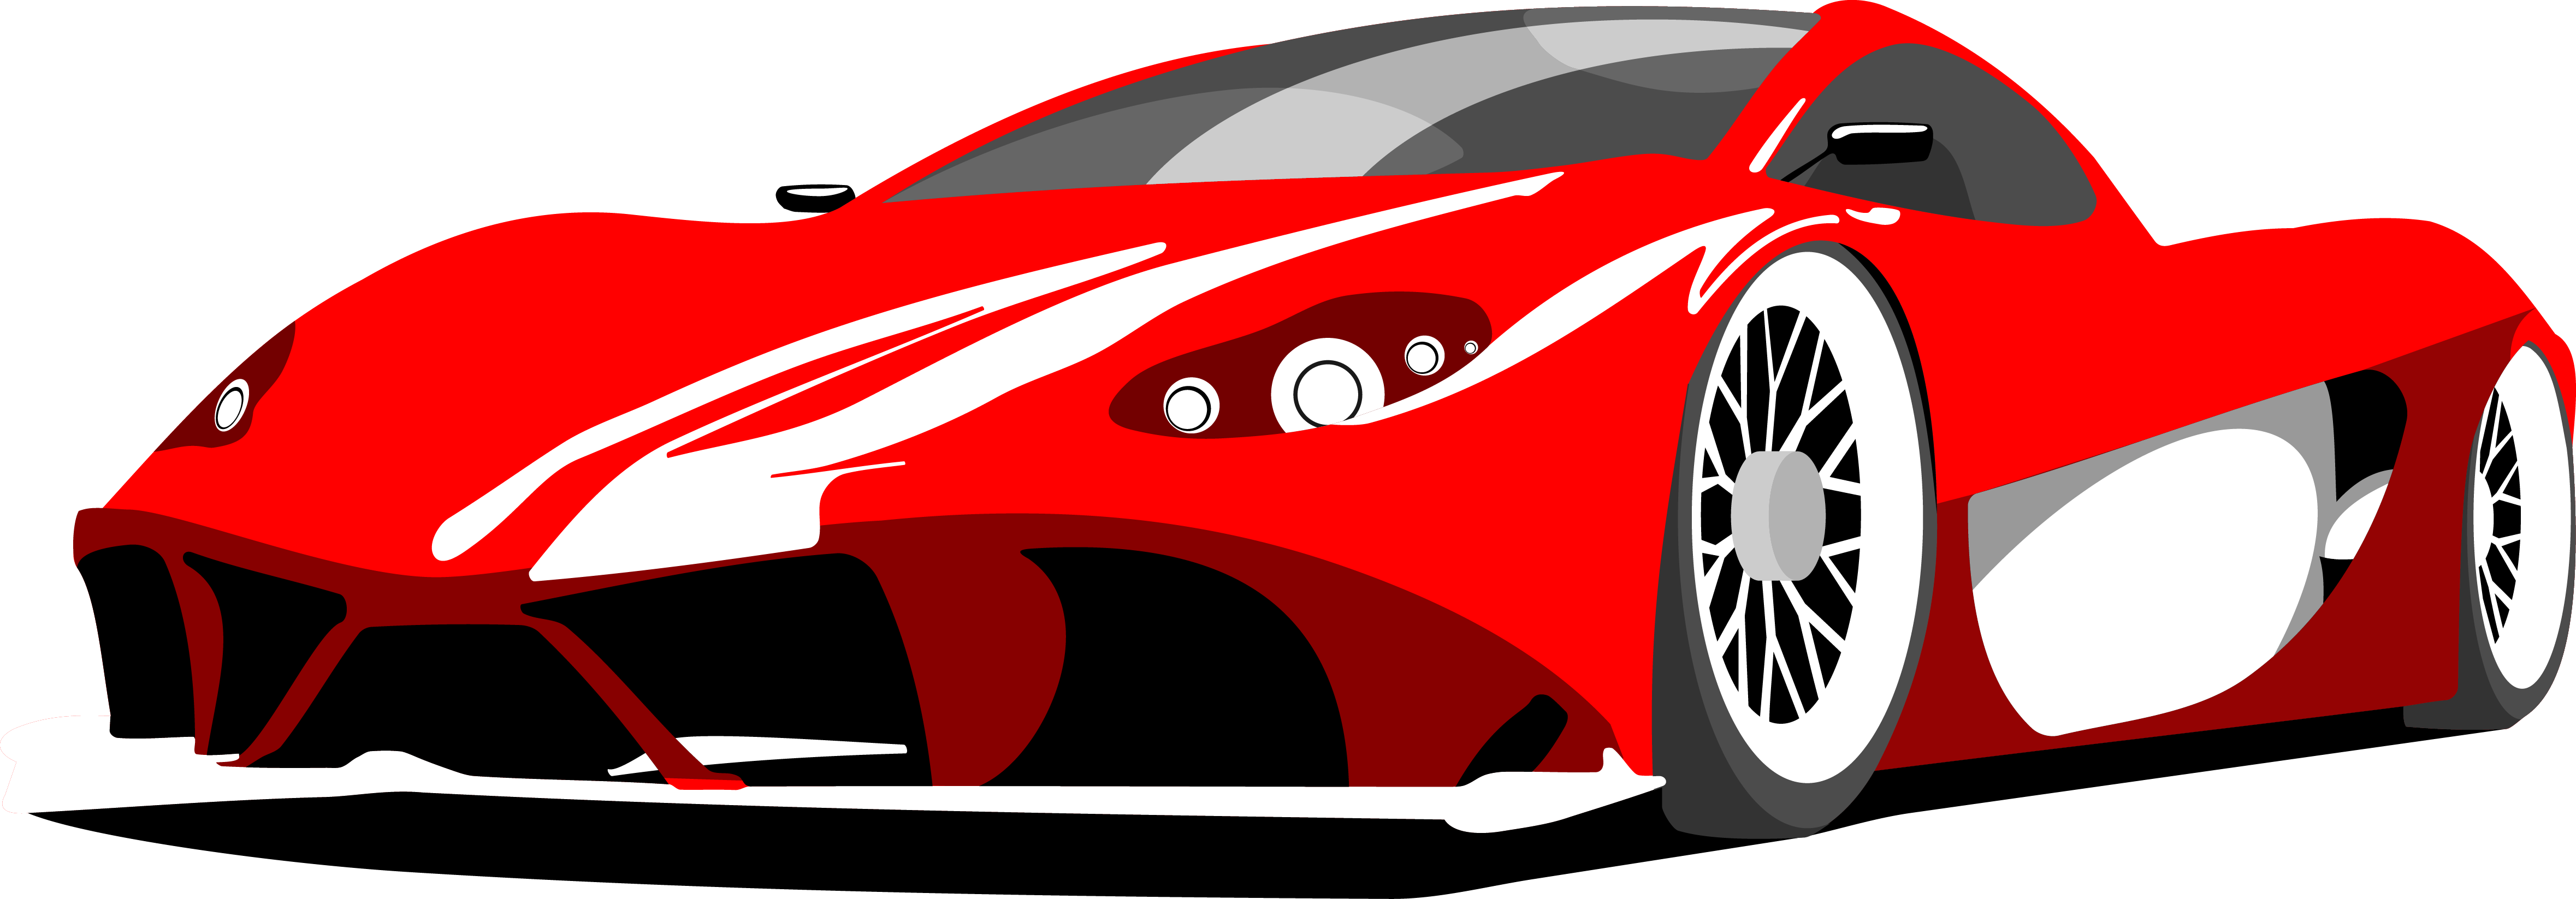 Sports Race Car